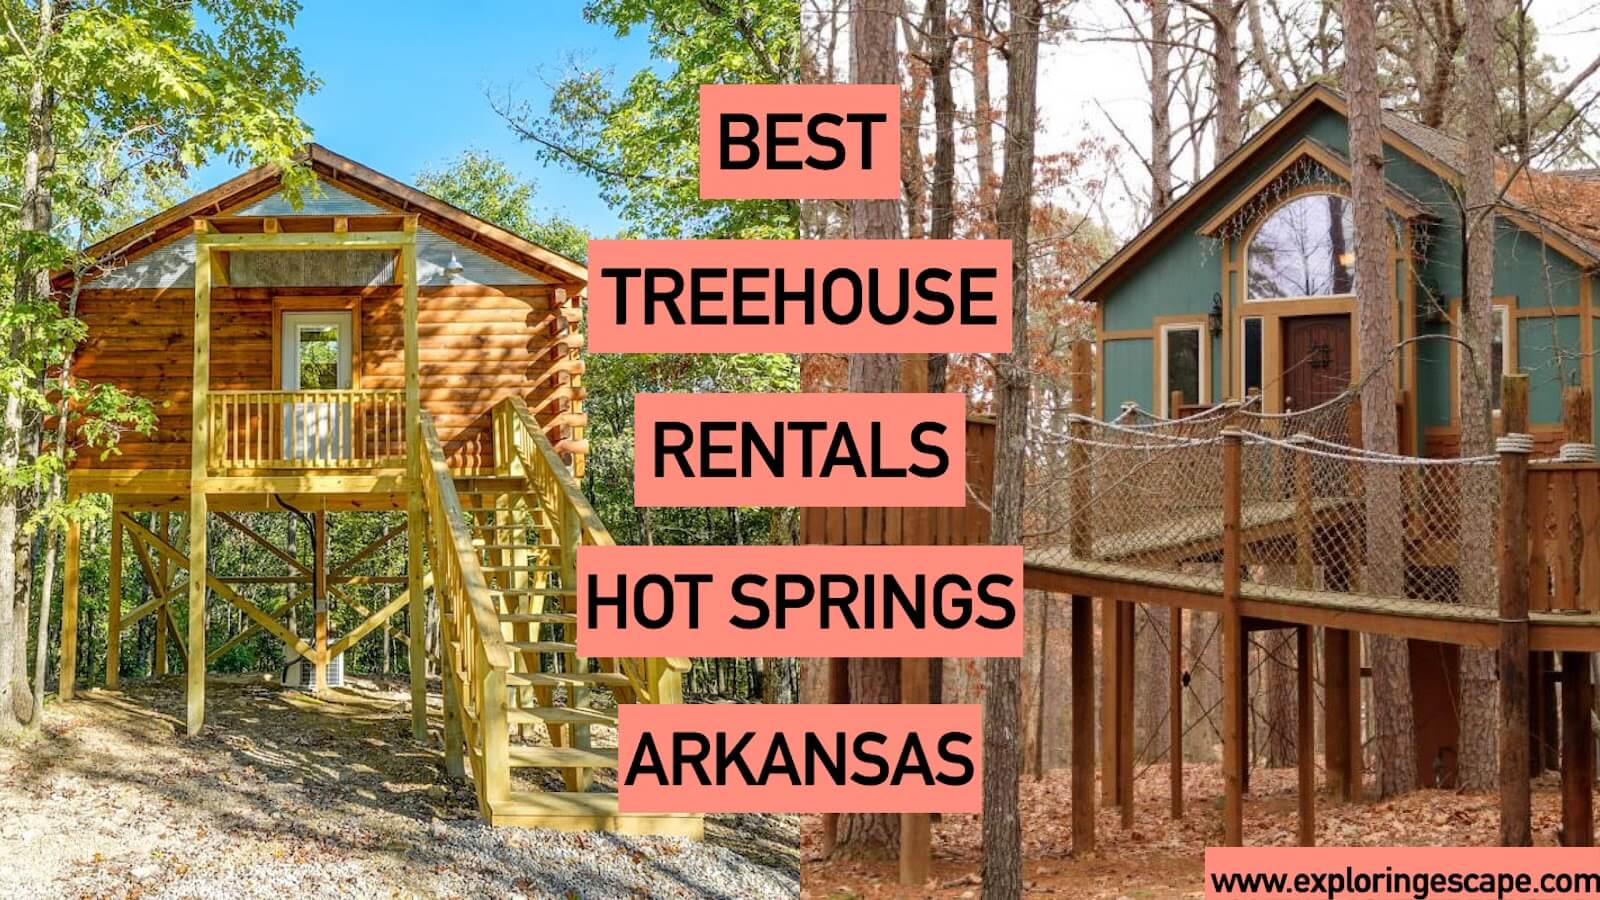 Best Treehouse Rentals Hot Springs Arkansas 